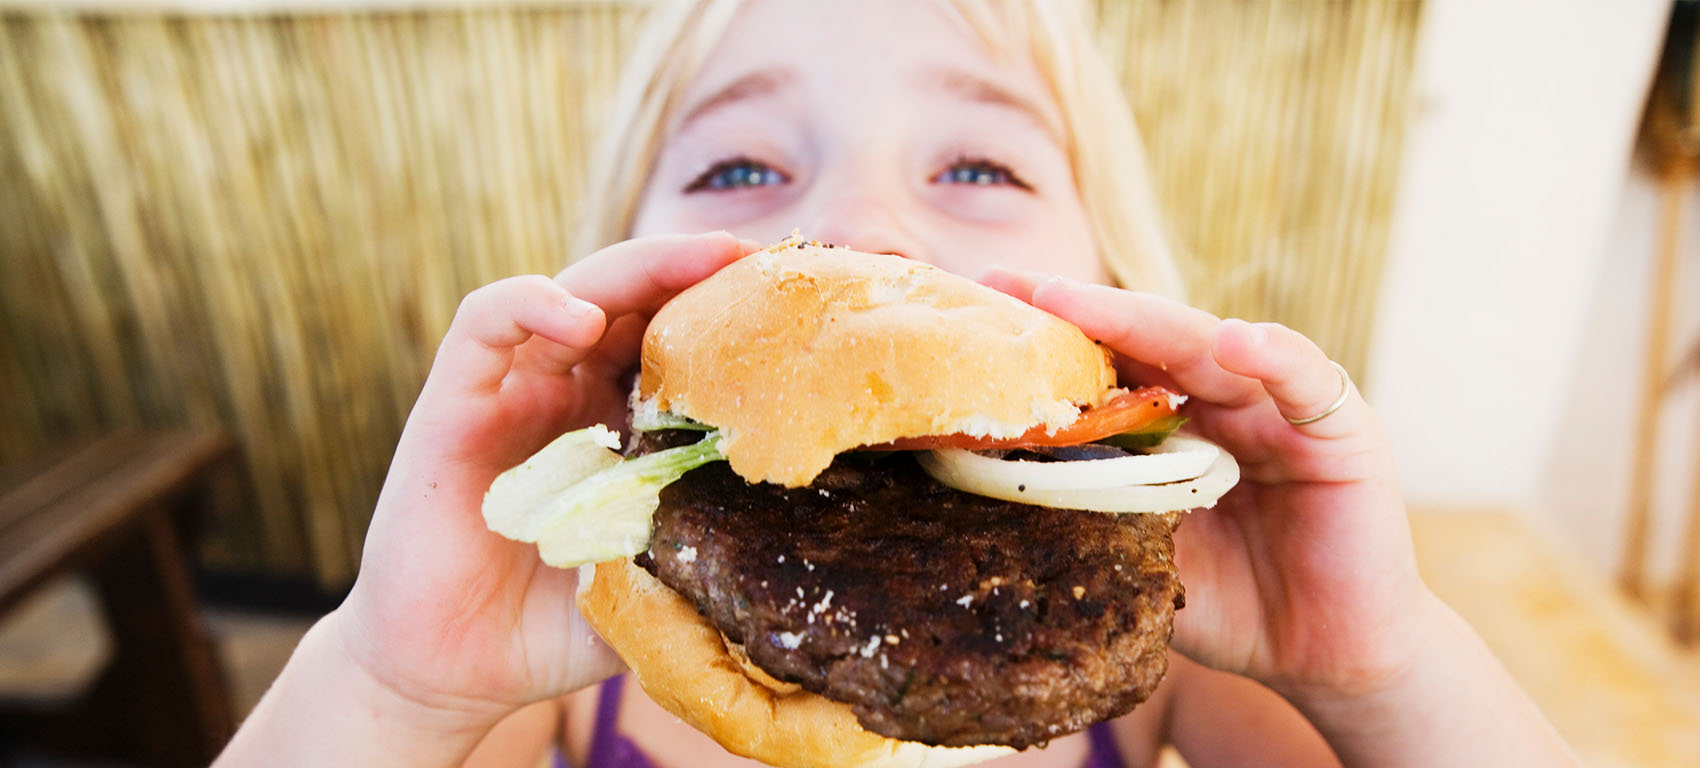 girl eating a burger